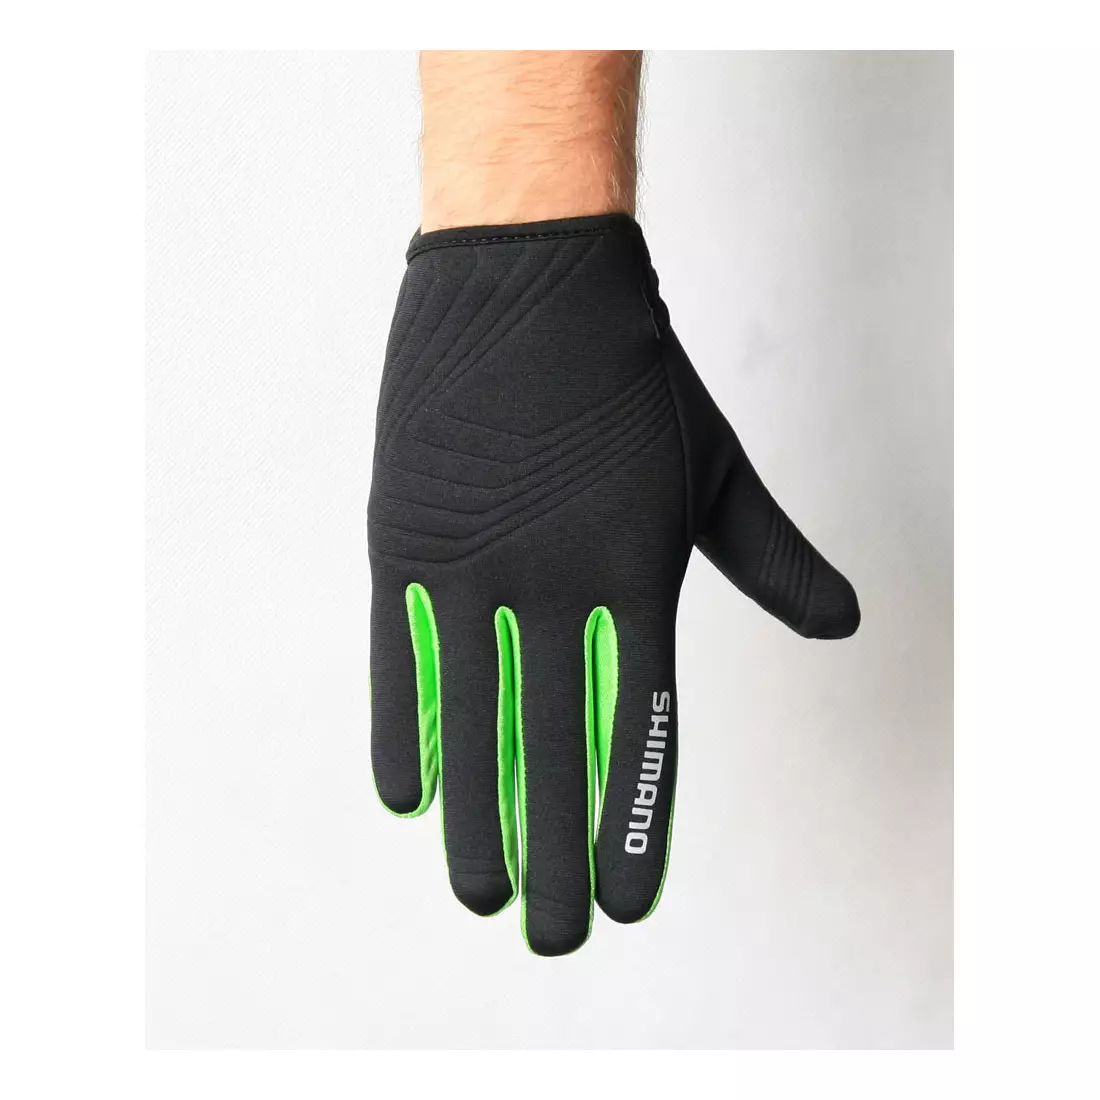 SHIMANO Windbreak winter gloves ECWGLBWLS32, color: Black and green